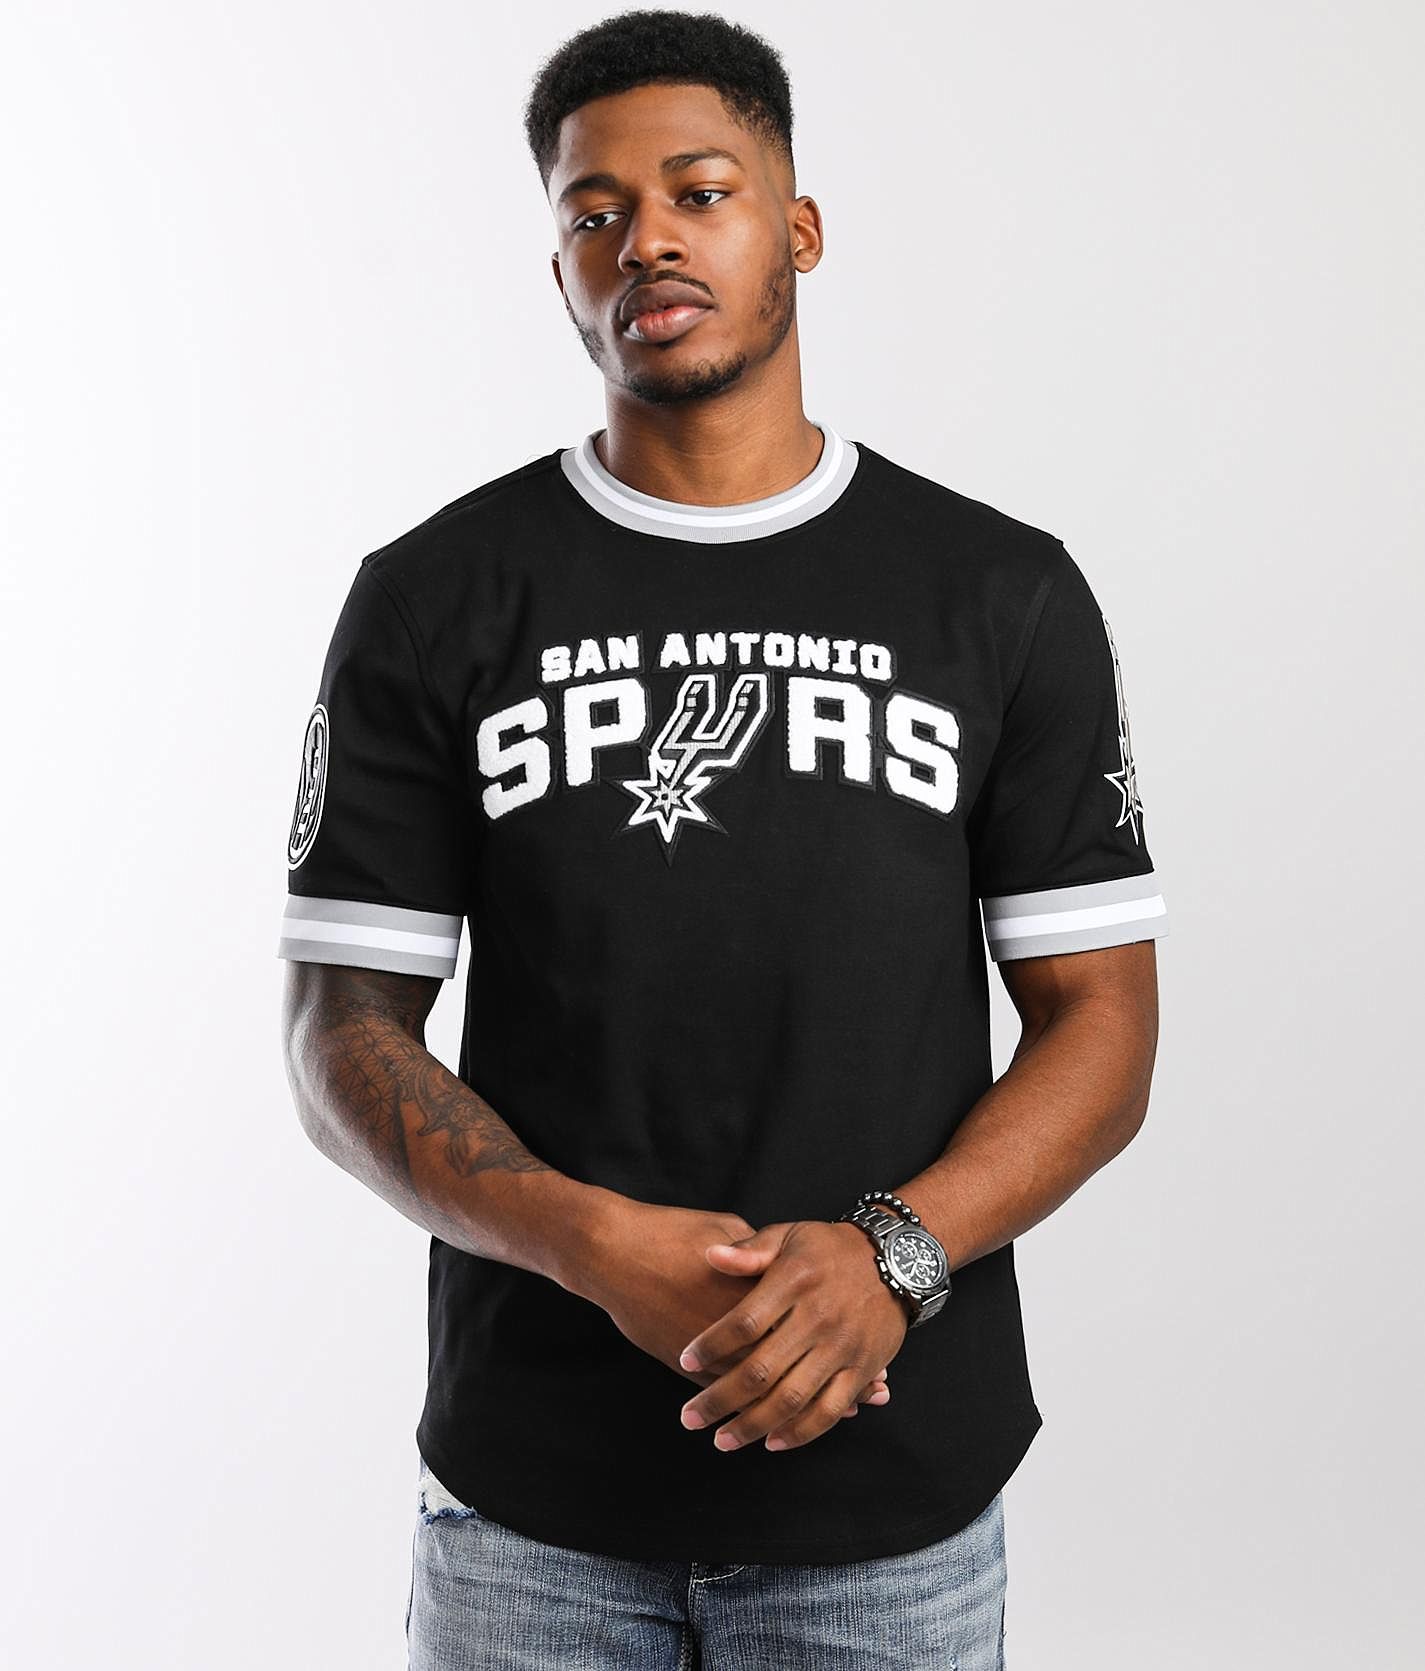  San Antonio Spurs Primary Logo Black T-Shirt : Sports & Outdoors